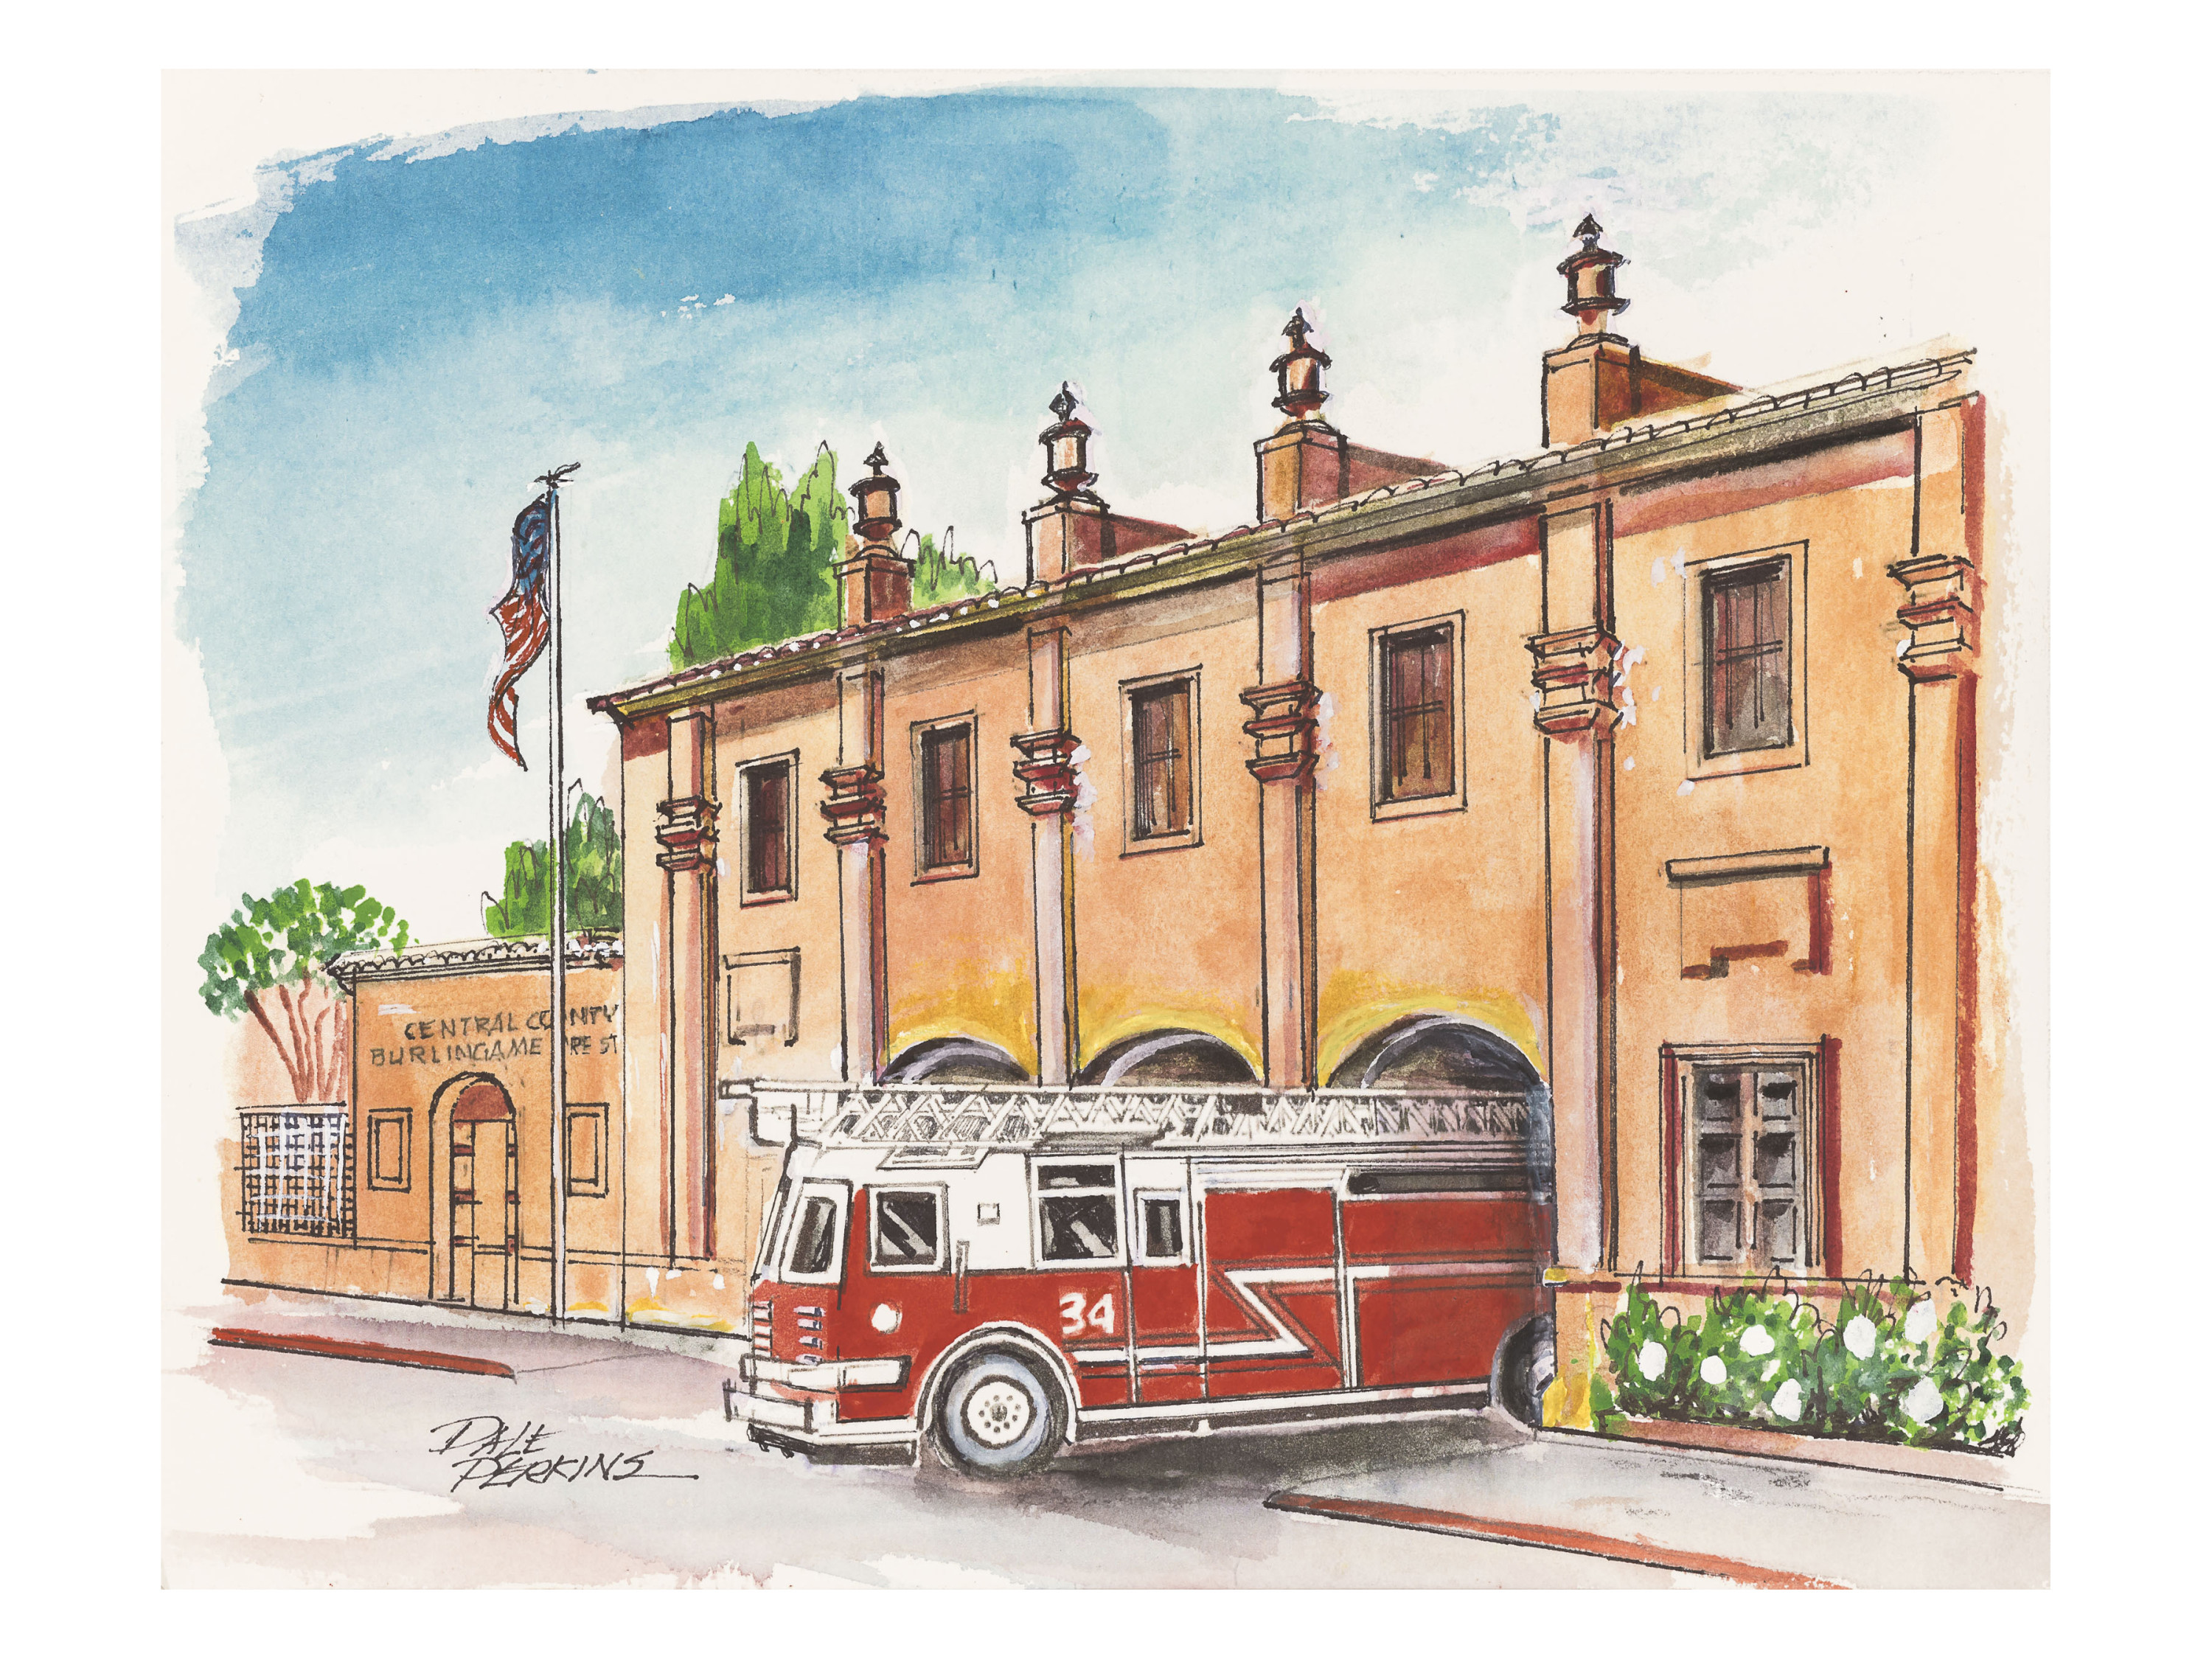 Burlingame fire station illustration by Dale Perkins